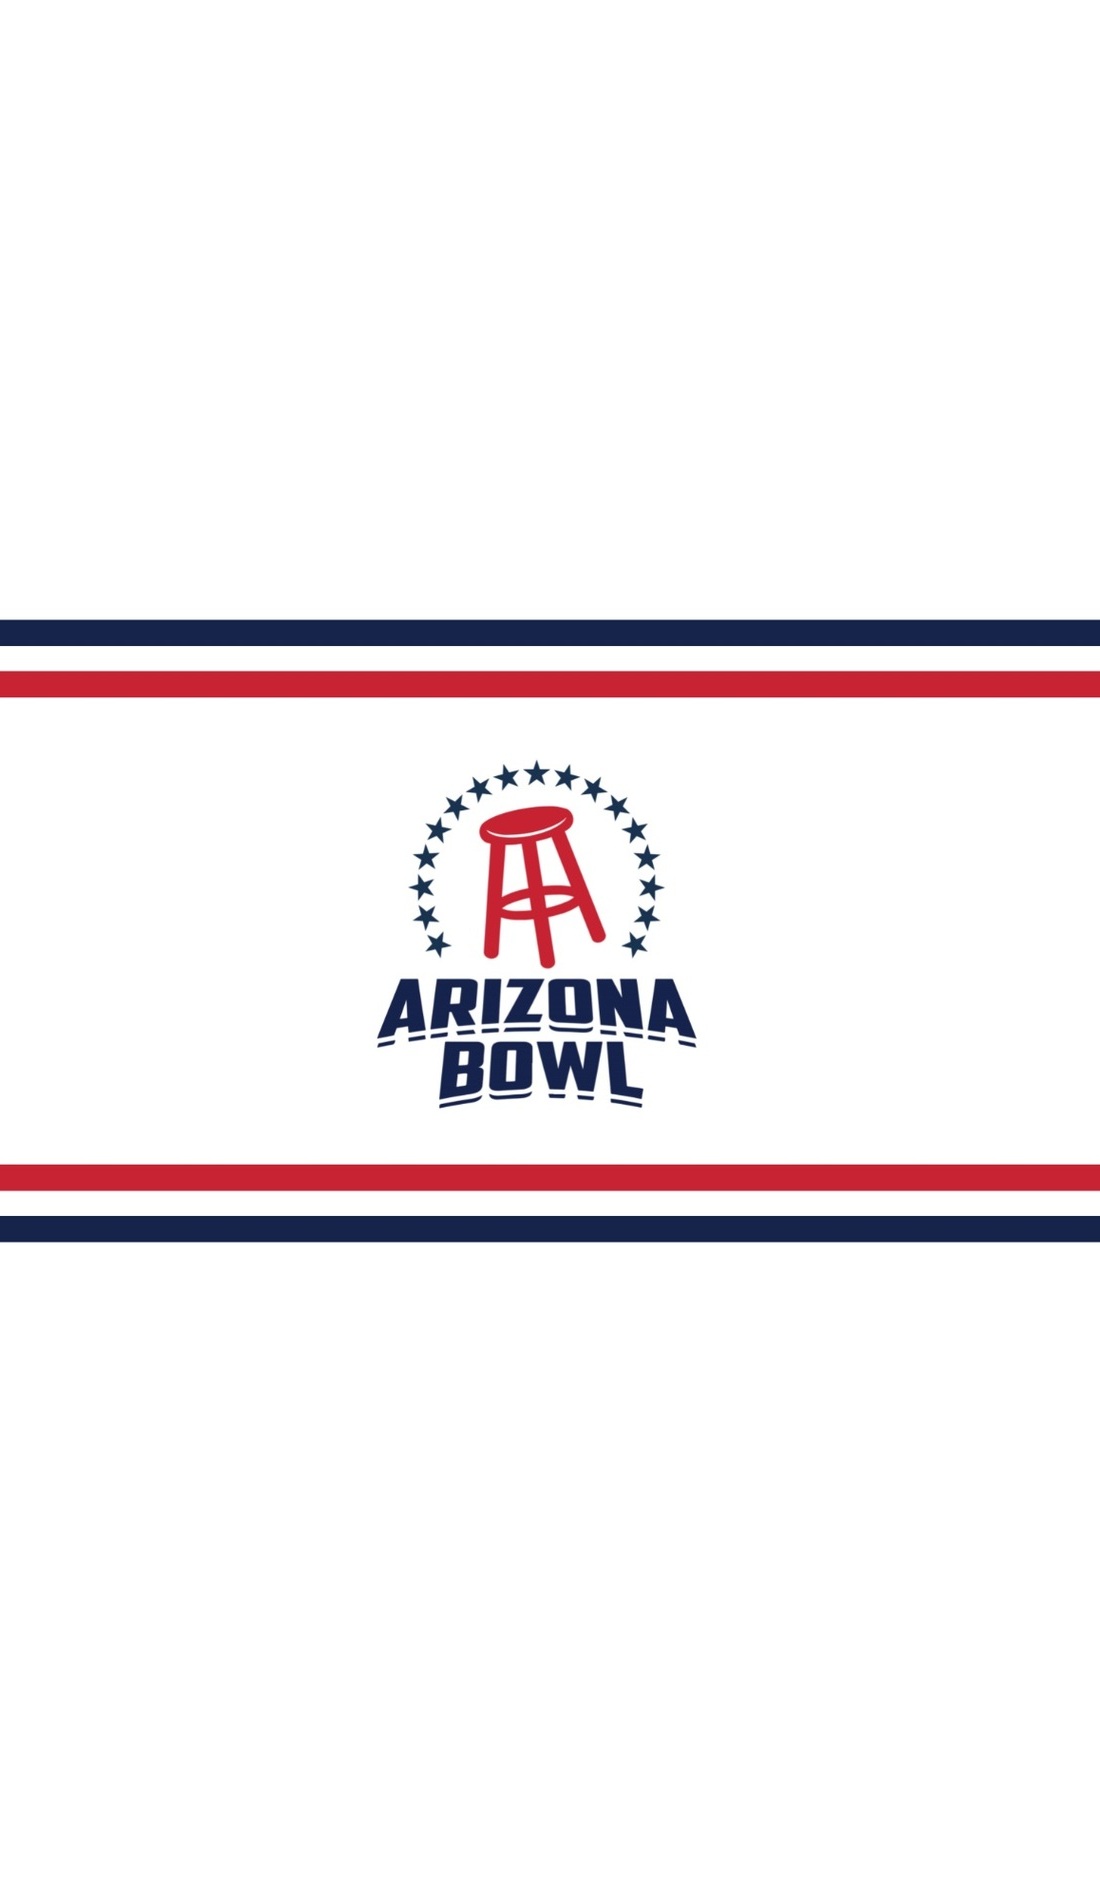 A Arizona Bowl live event